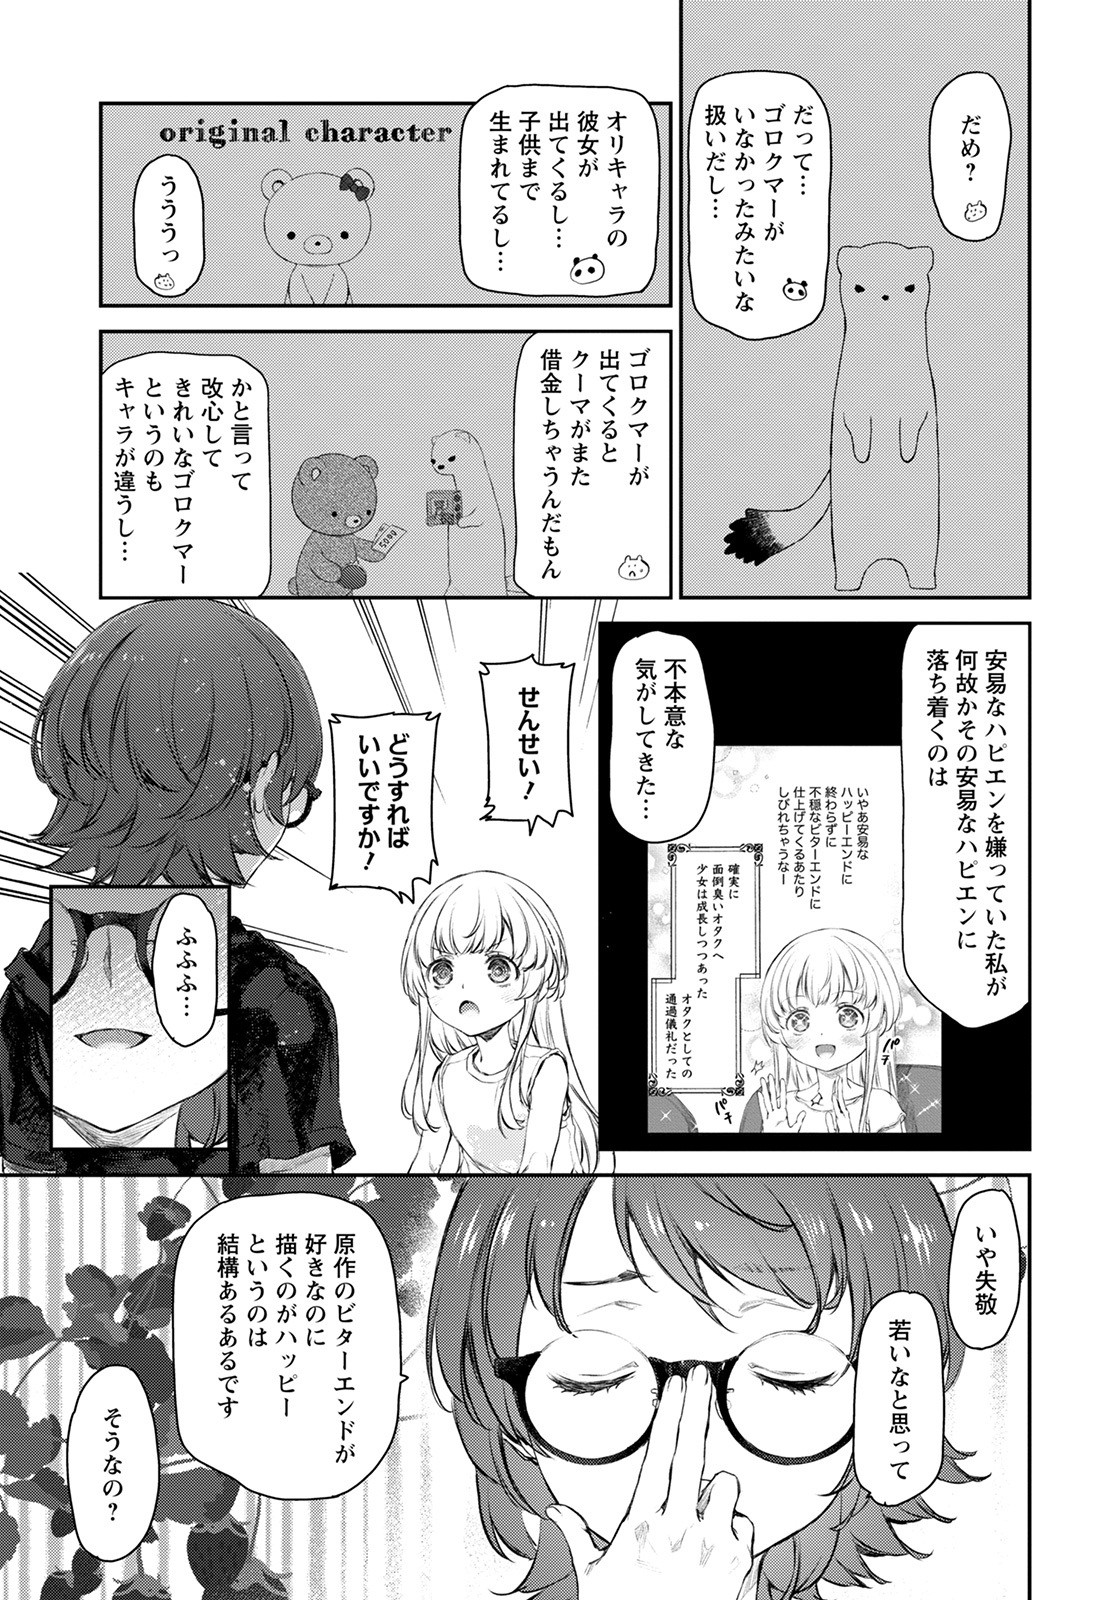 Uchi no Maid ga Uzasugiru! - Chapter 52 - Page 17